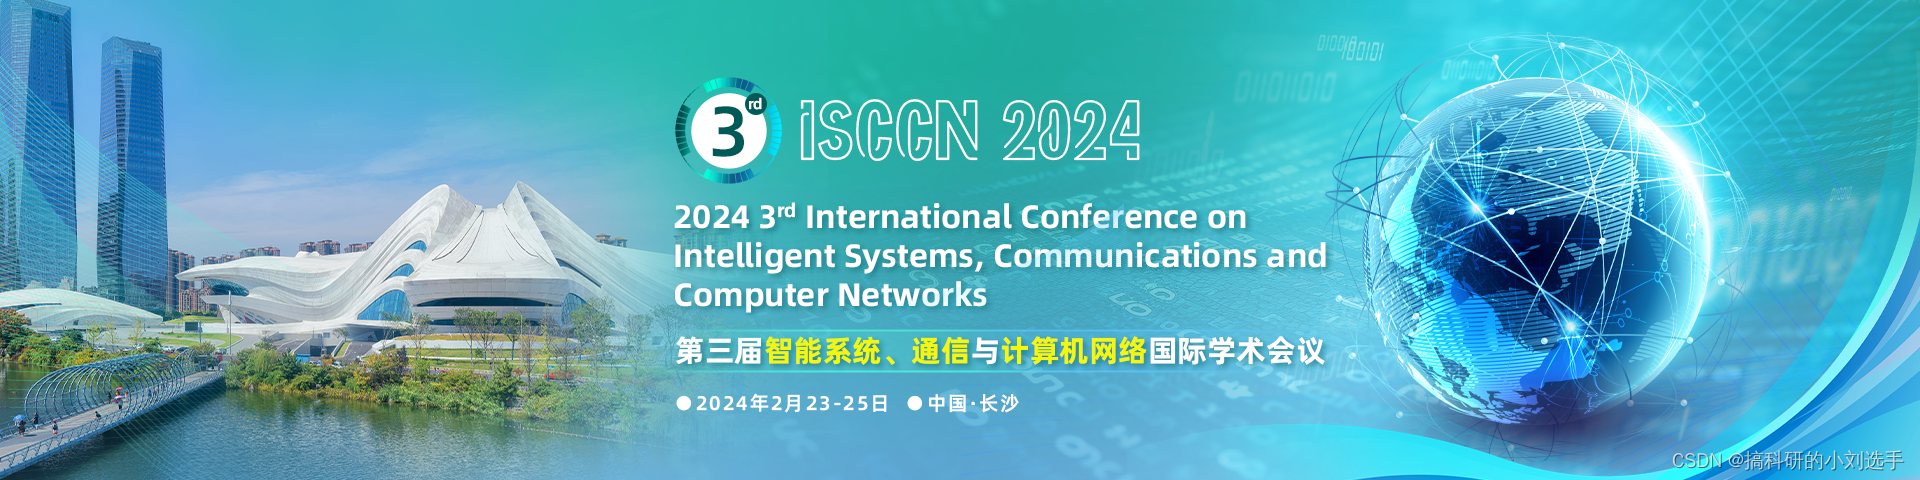 【EI会议征稿】第三届智能系统、通信与计算机网络国际学术会议（ISCCN 2024）